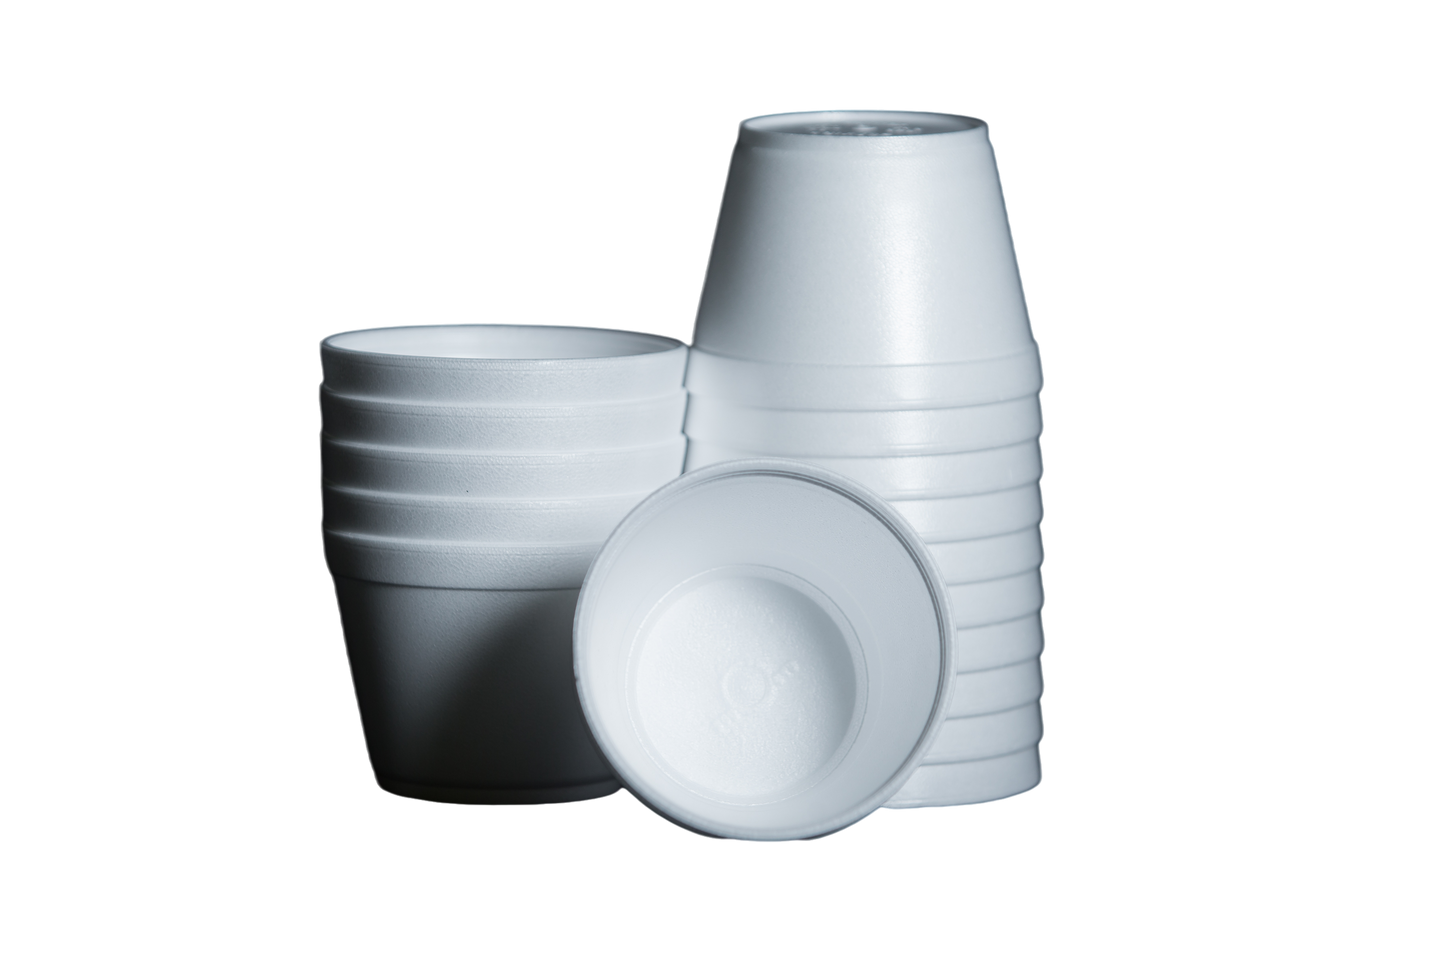 16oz styrofoam cups